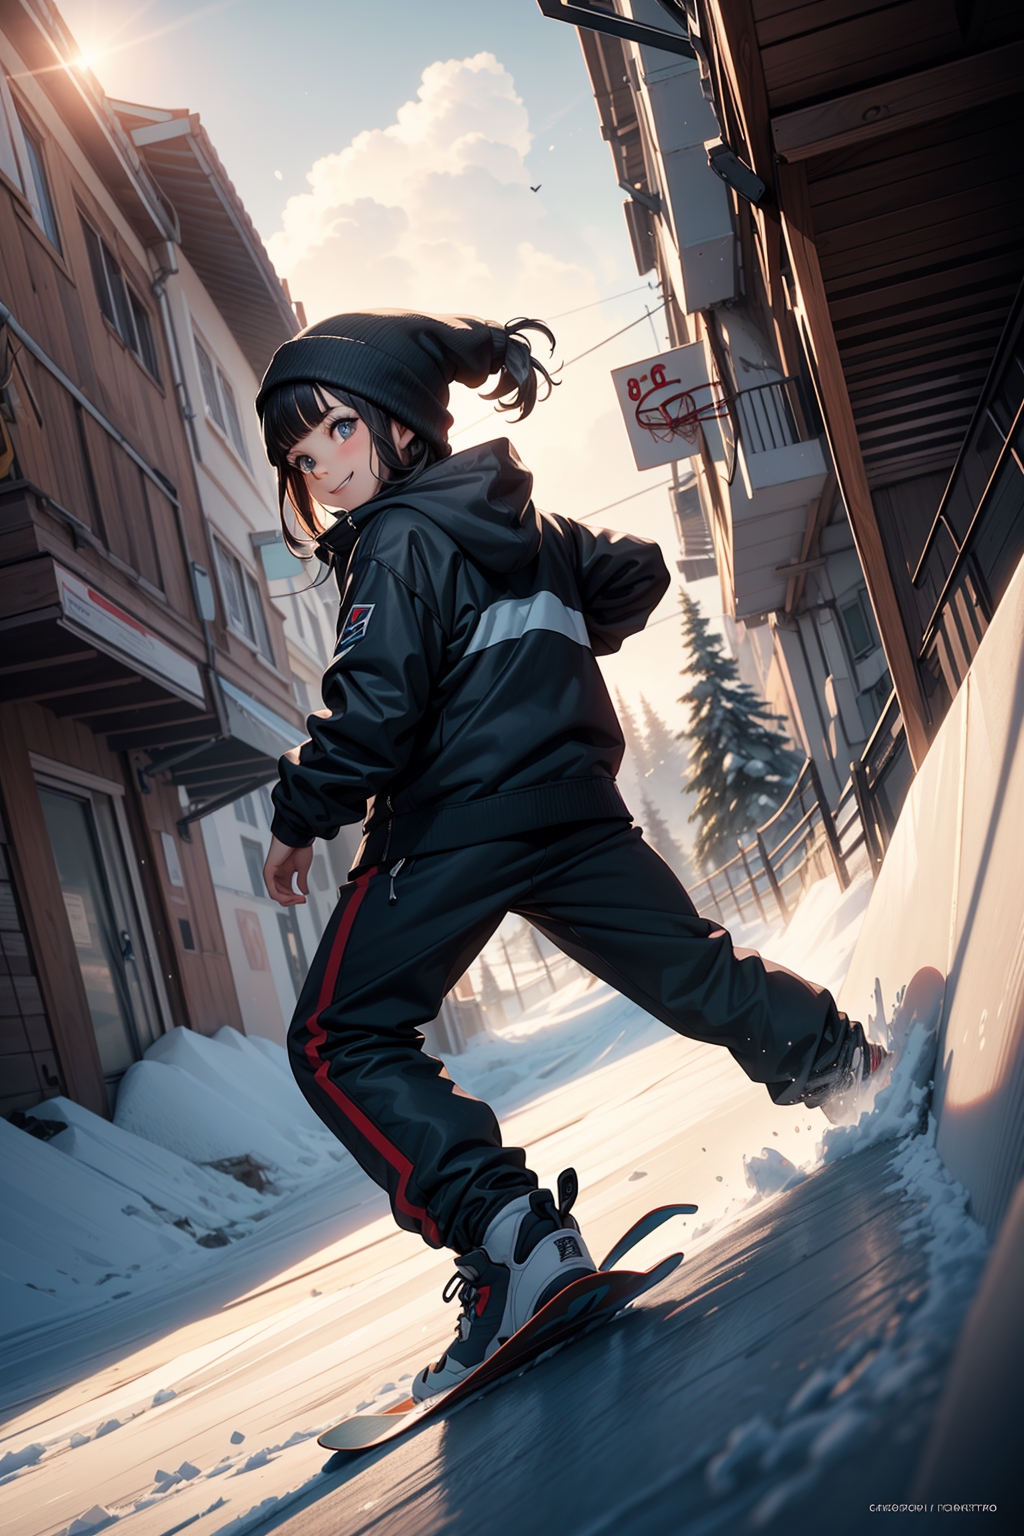 Snowboard ESP FreeRide 130 Anime Graphic Board Red Black | eBay